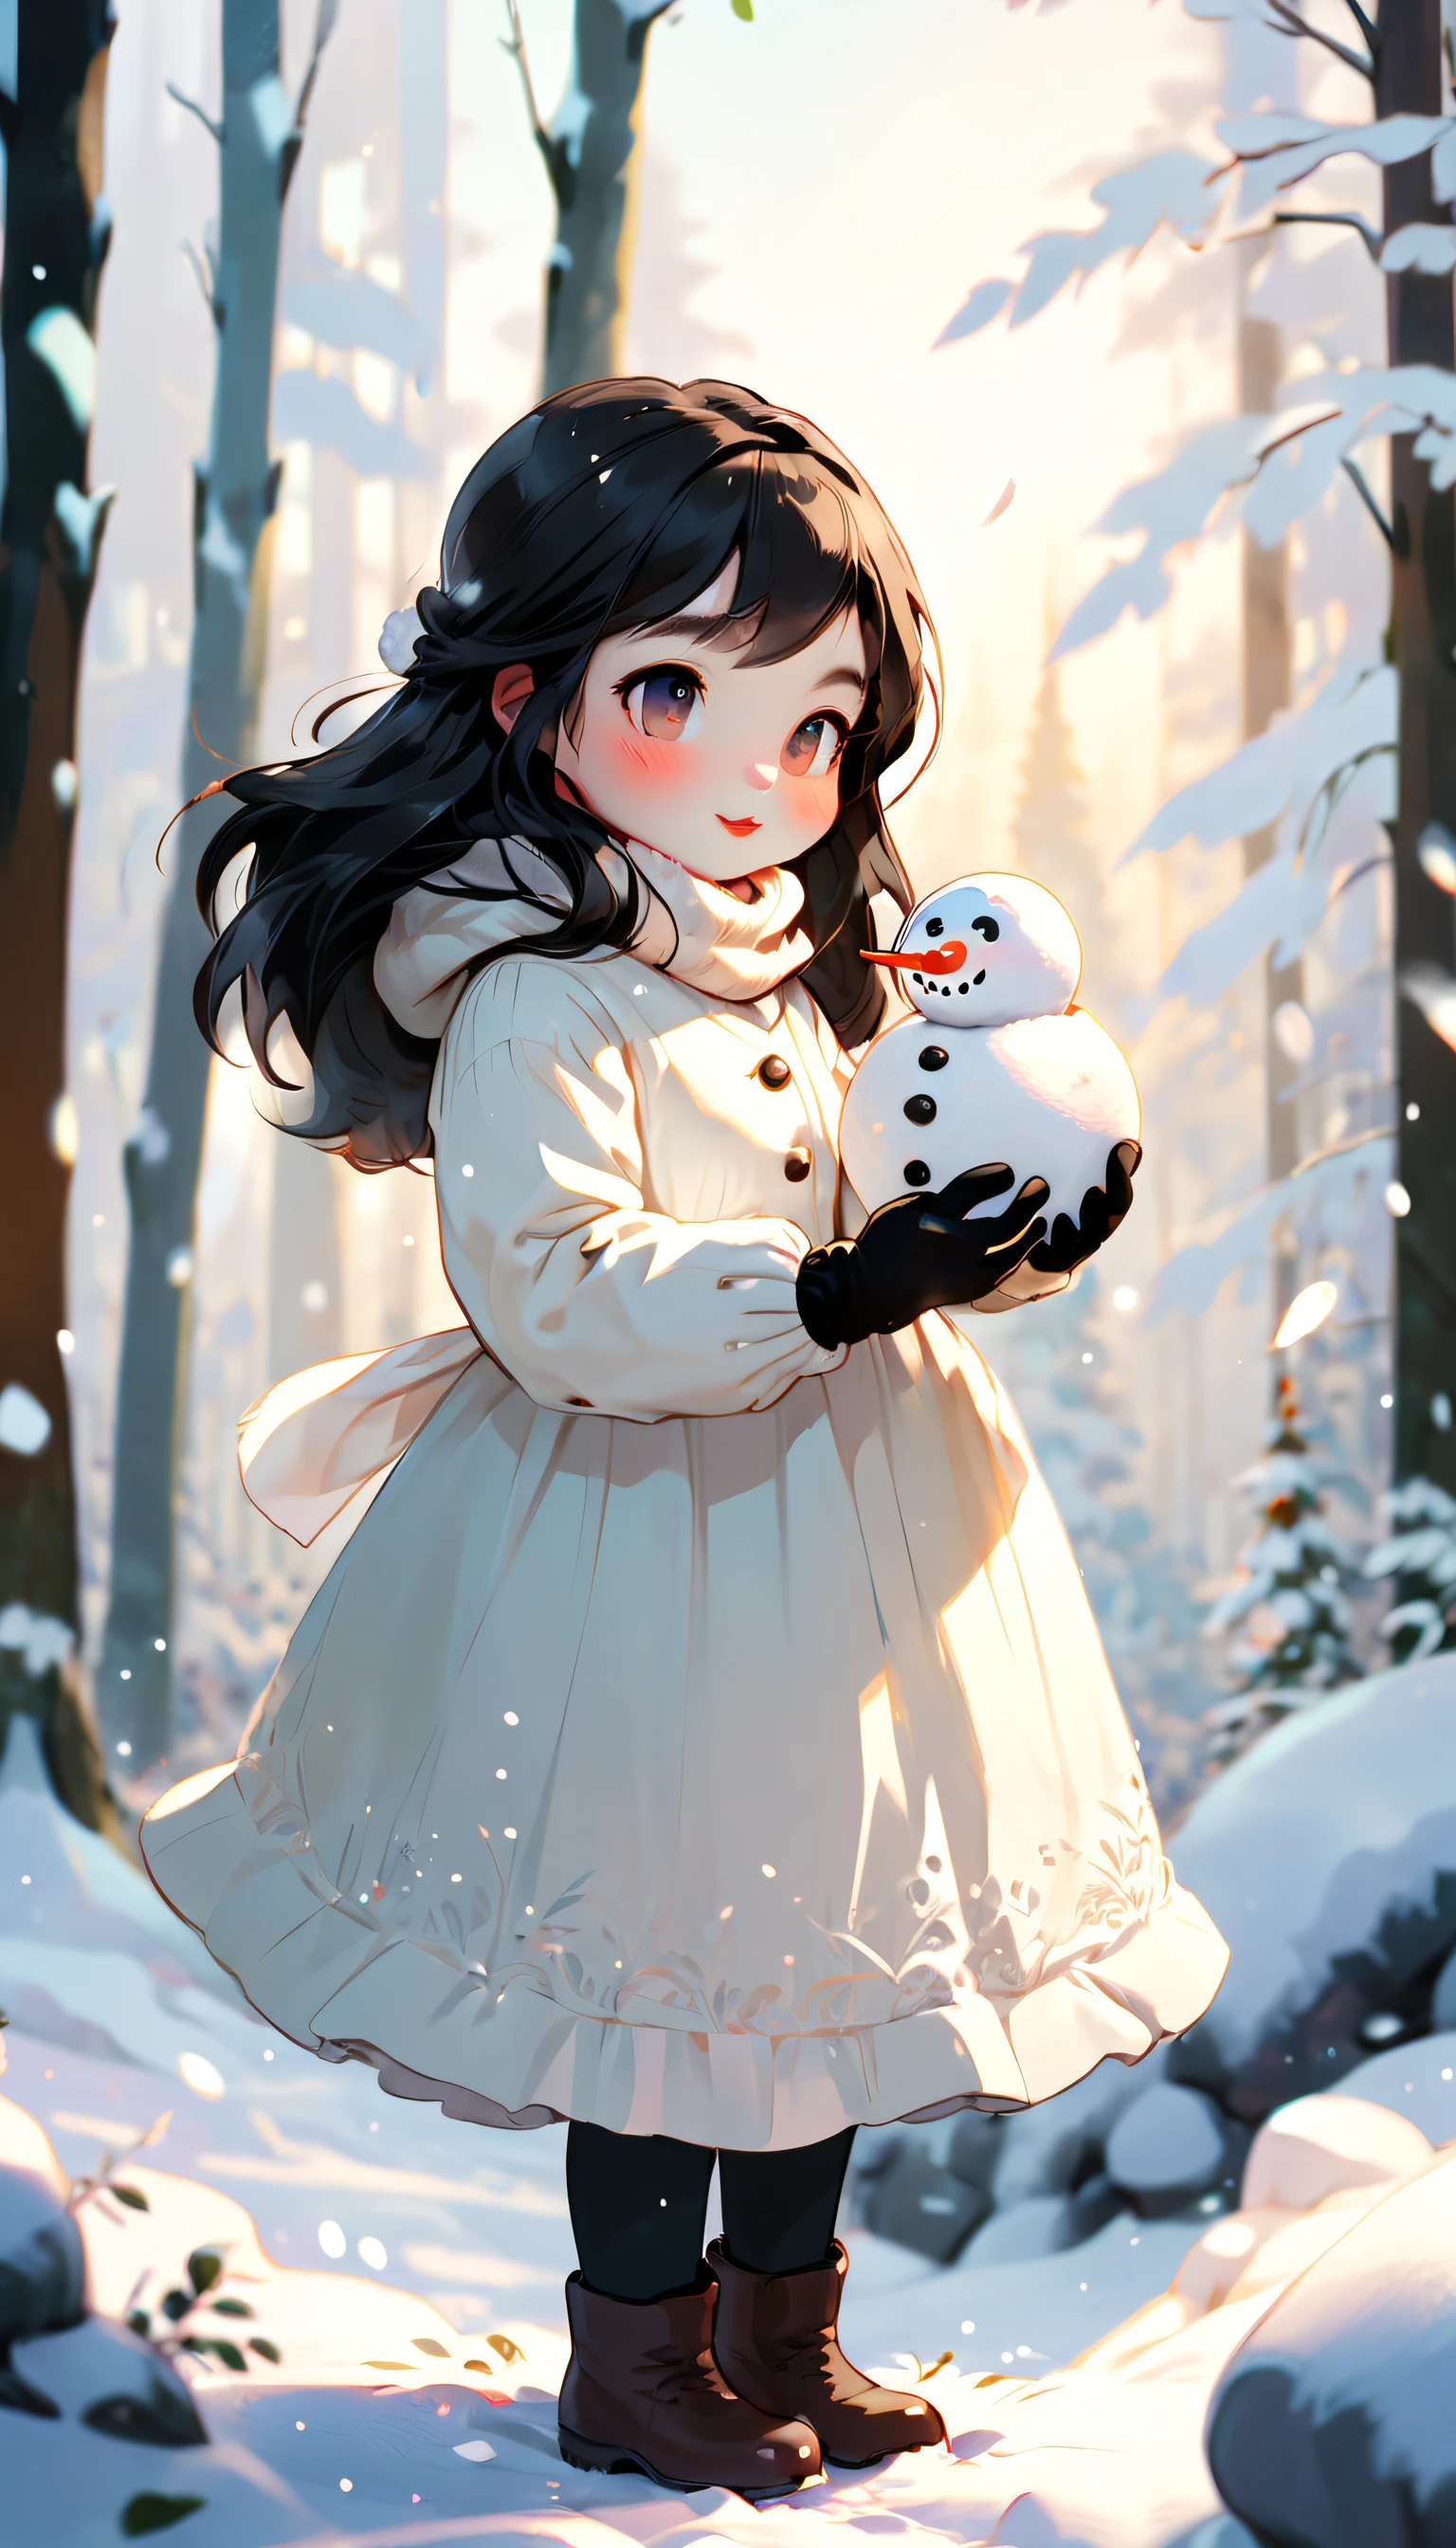  in gloves building a snowman in a 겨울 forest, 검은색 긴 머리, 전망，흰색 긴 소매 드레스, 겨울, 유키토, 설경, 따뜻한 빛, 옥외, 동화같은, 공상, 밝은 배경, 빈 상단 프레임, Ngai 스타일을 패배, 최고의 품질 8K, 매우 상세한